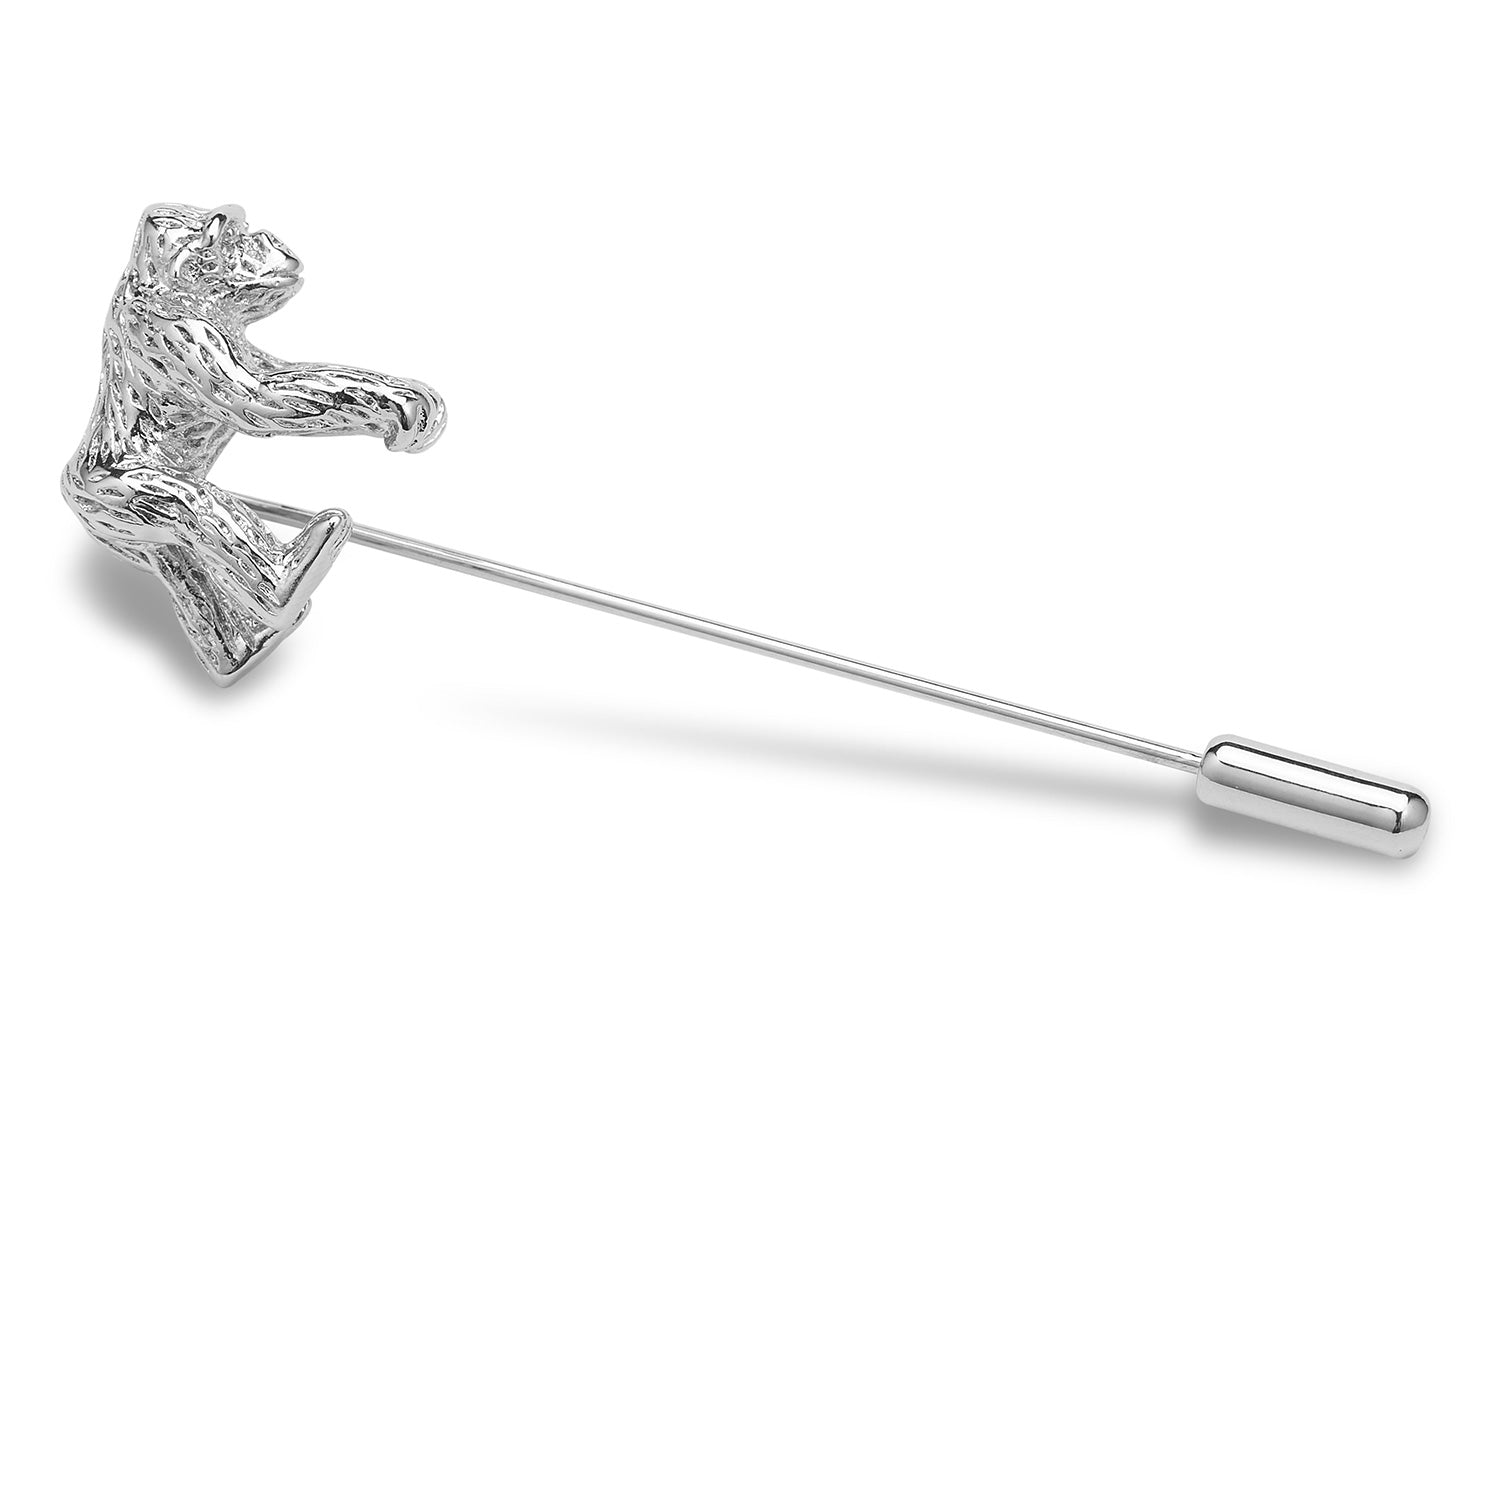 Silverback Gorilla Lapel Pin